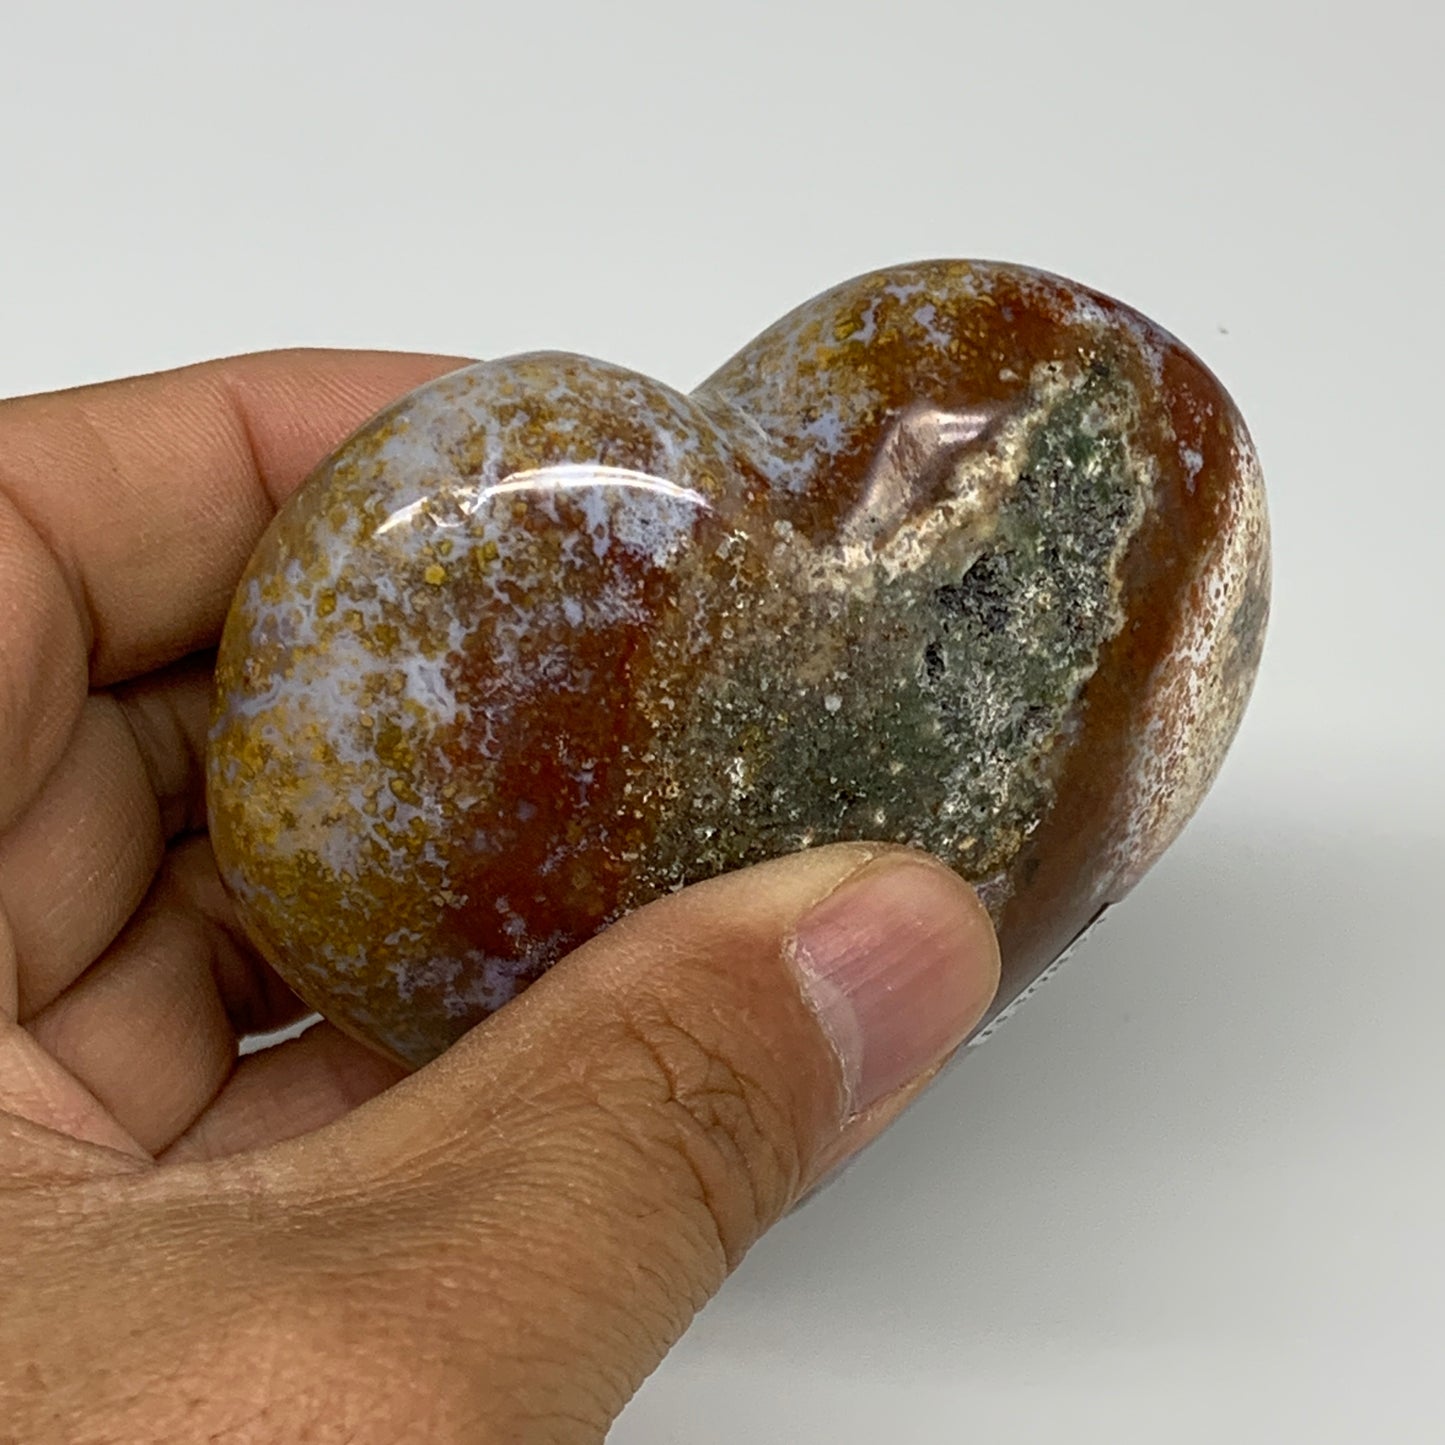 0.40 lbs, 2.7"x2.8"x1.2" Ocean Jasper Heart Polished Healing Crystal, B30854